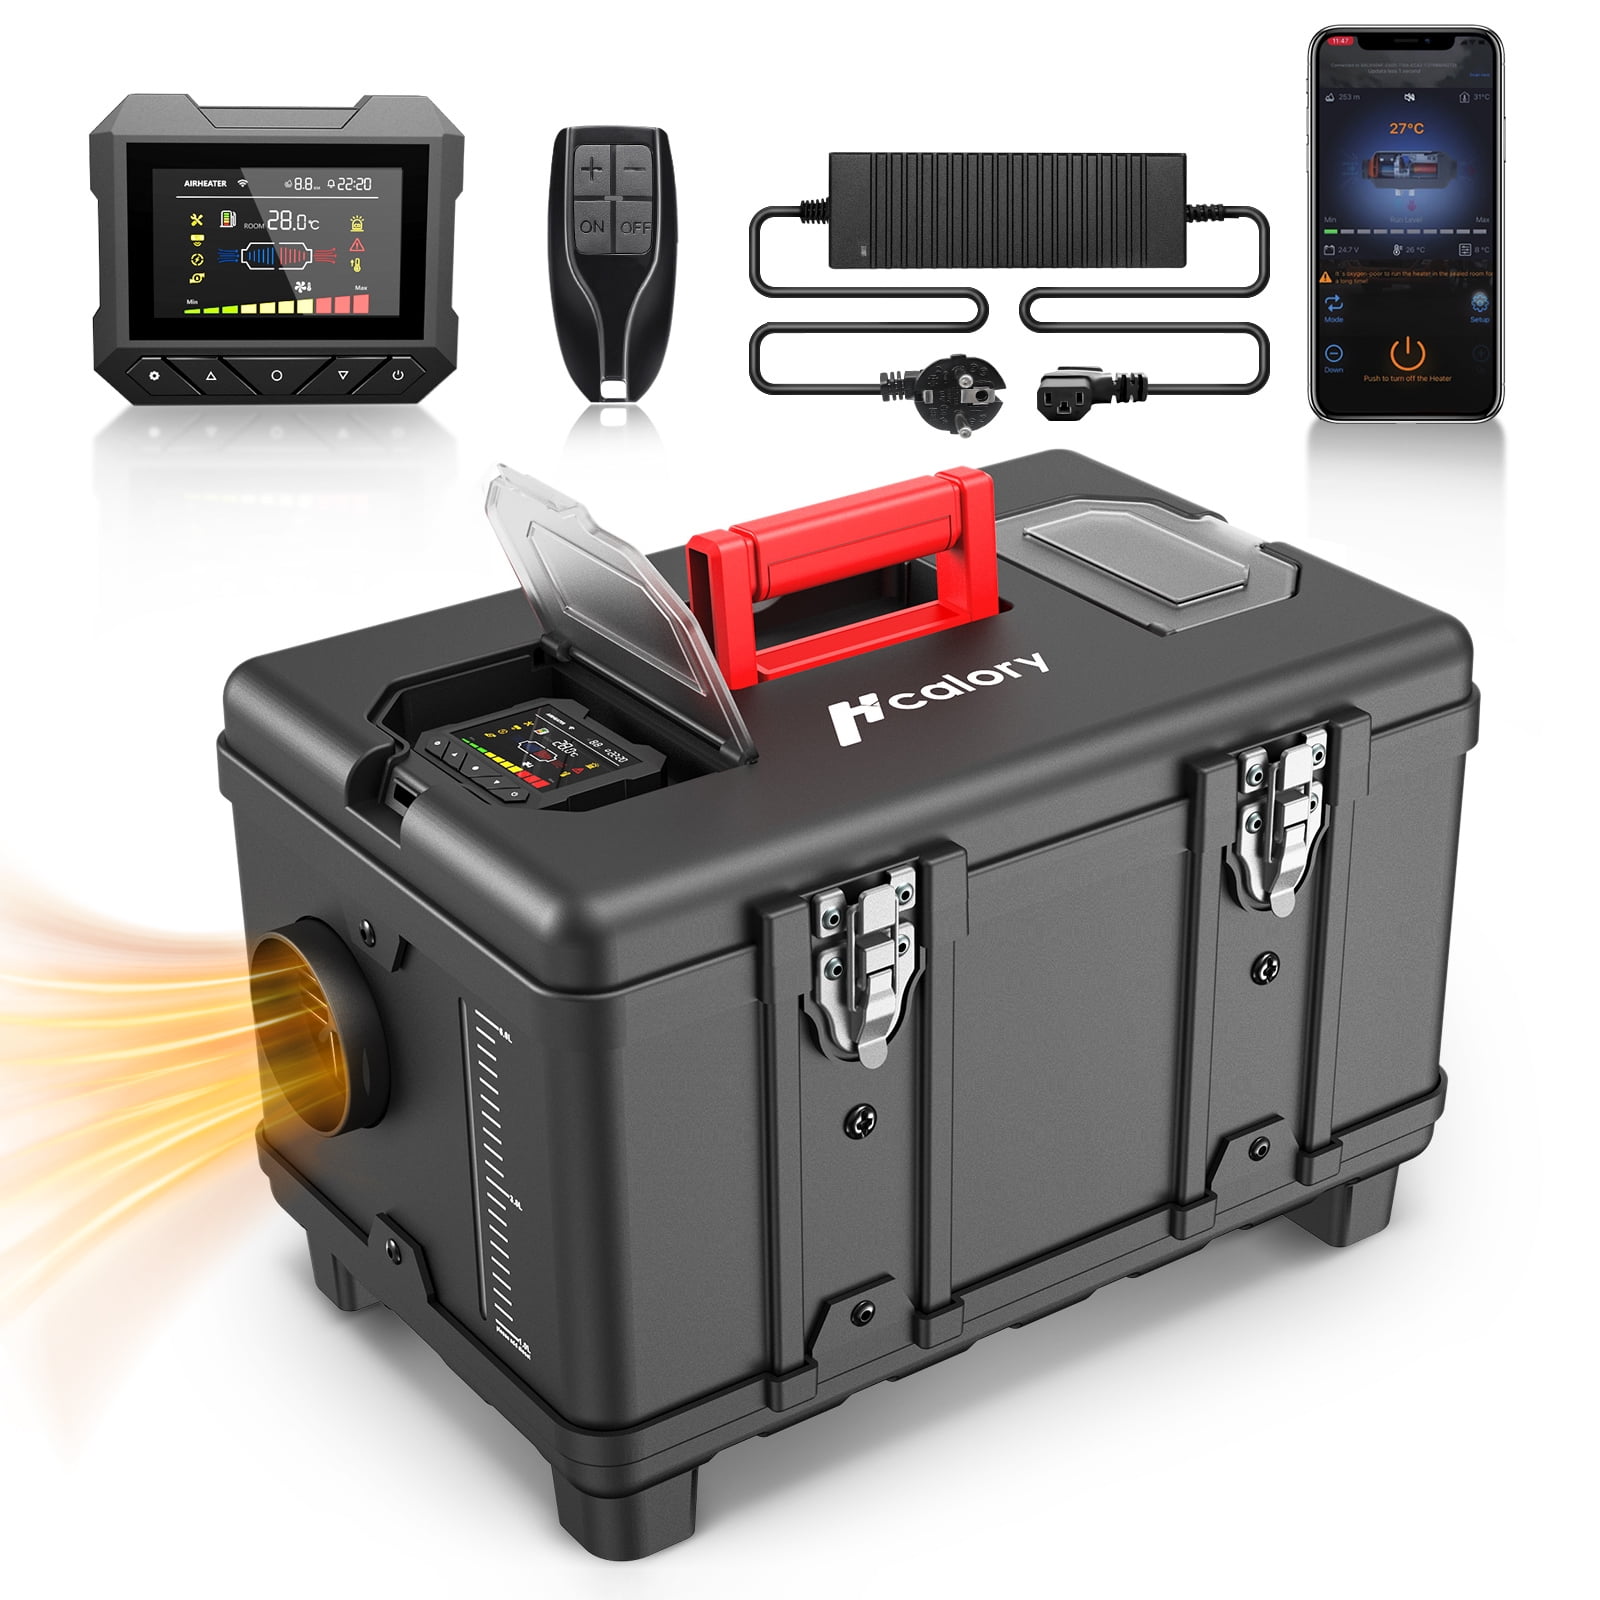 Hcalory HC-A02 Portable Smart Diesel Air Heater - Shop on Banggood 